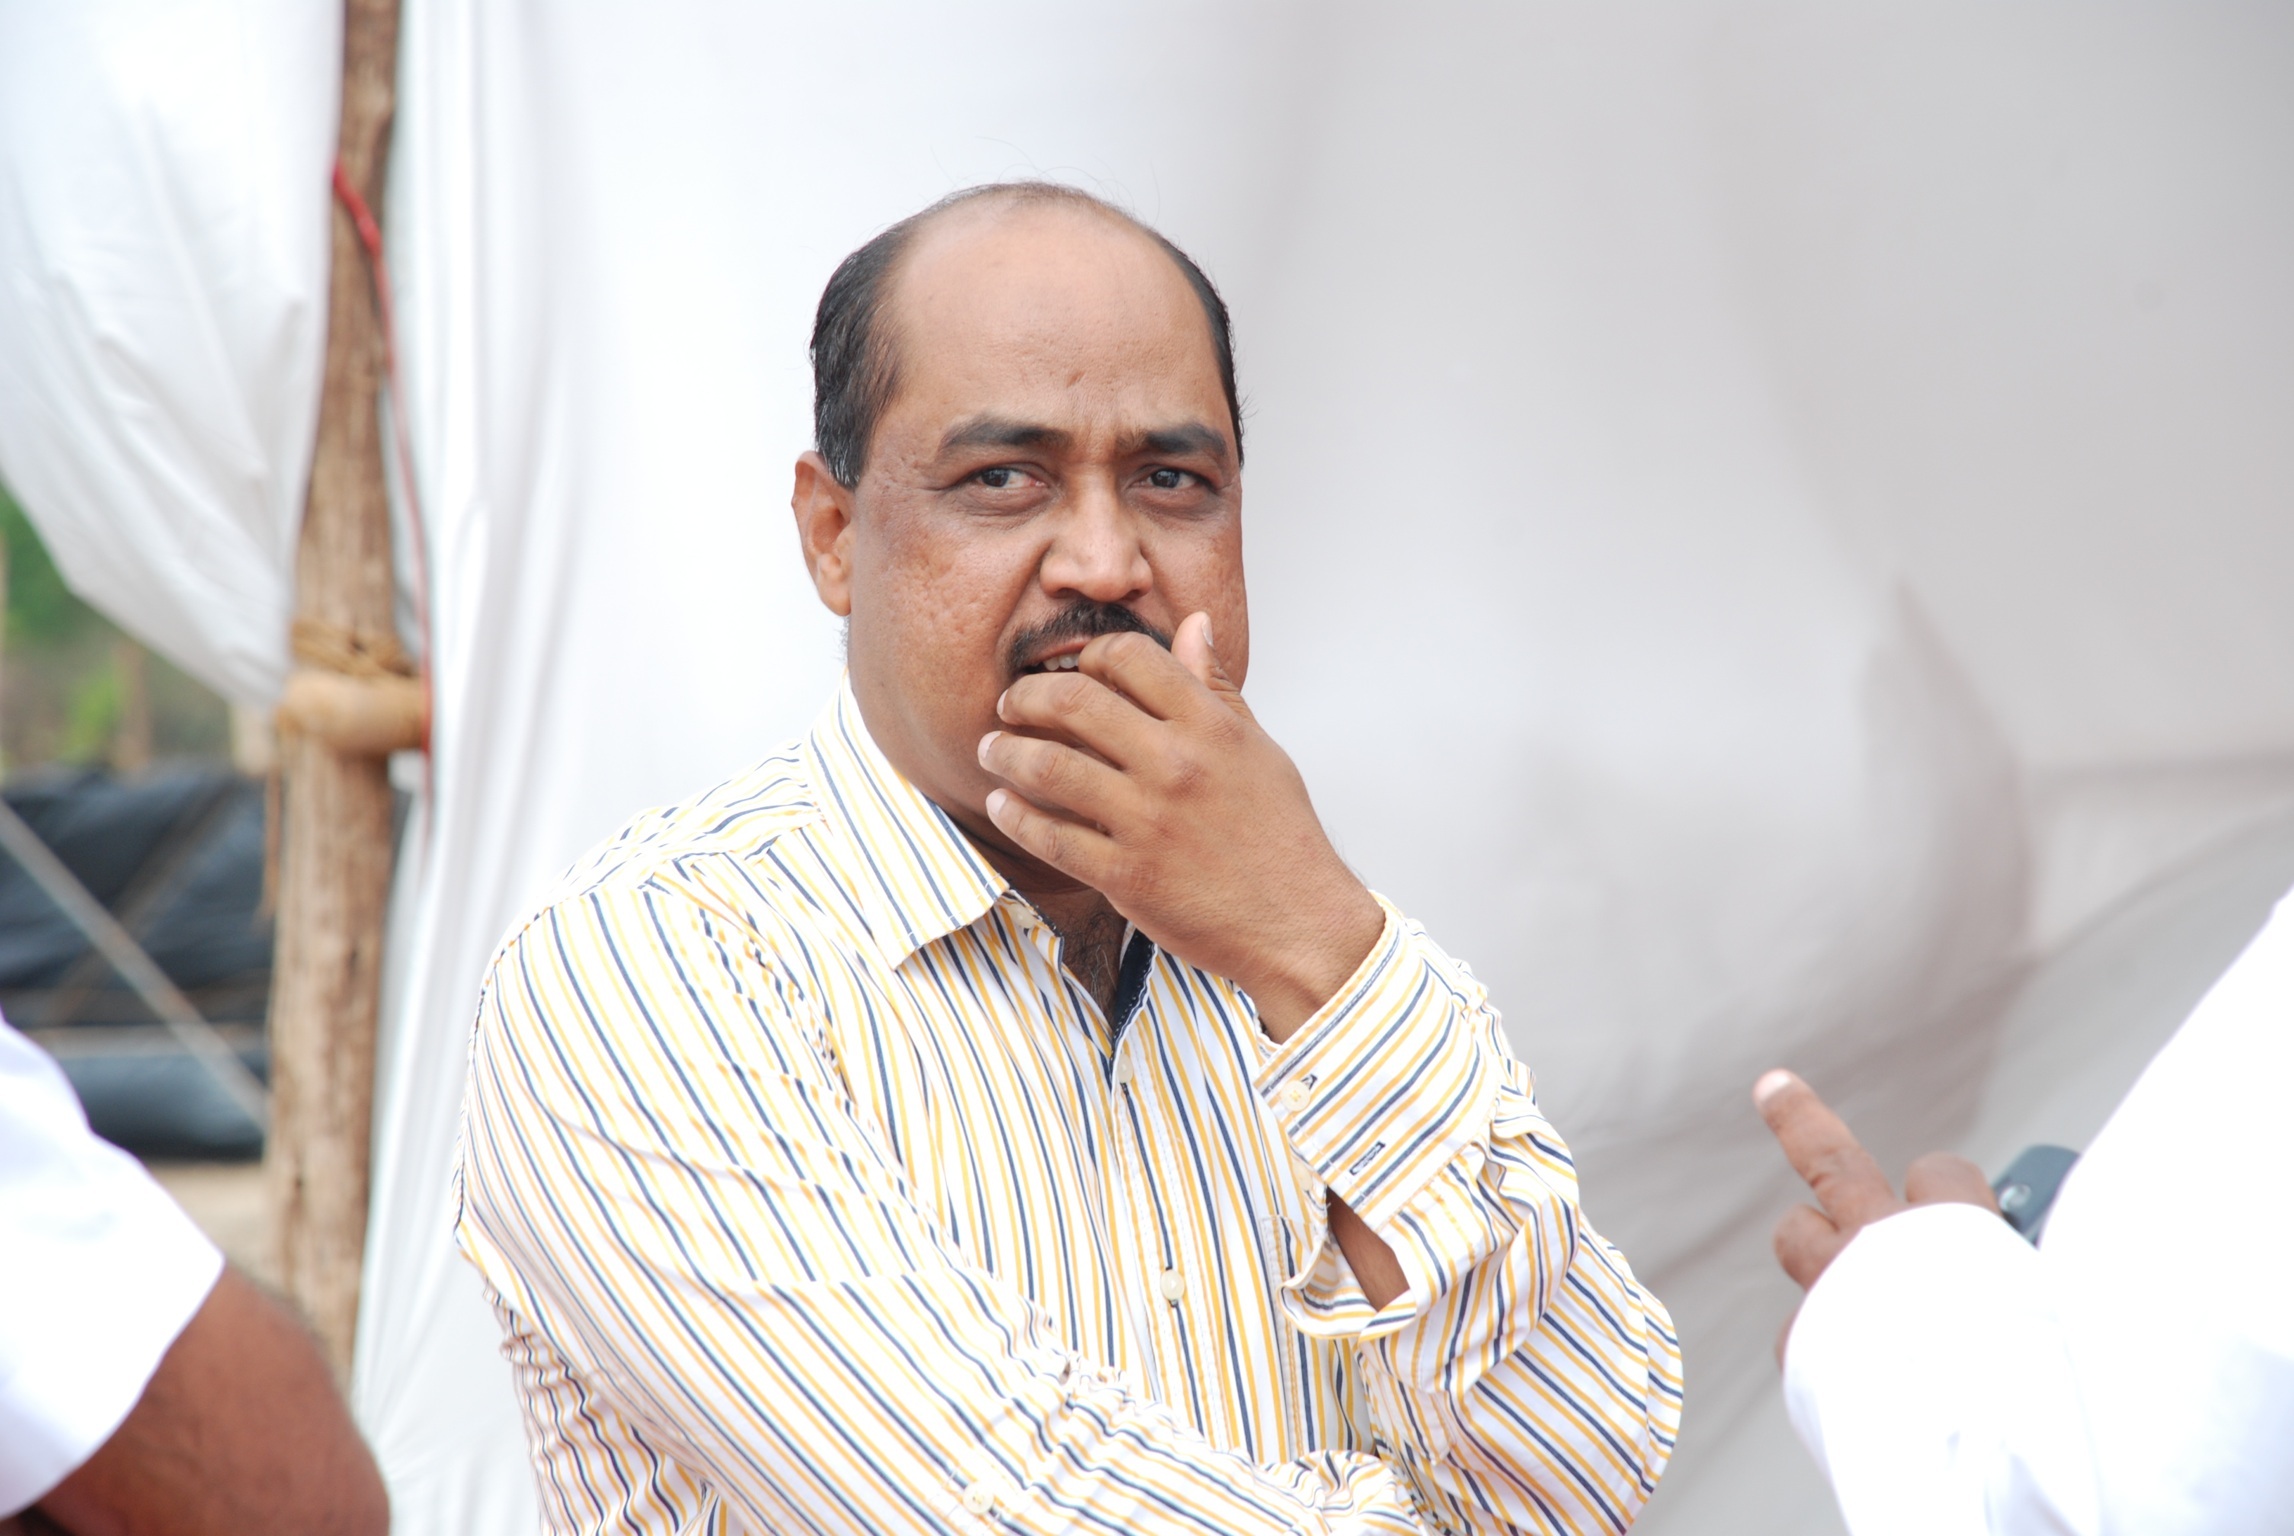 Hemant T. Dhumal, Government of Maharashtra - Executive Engineer